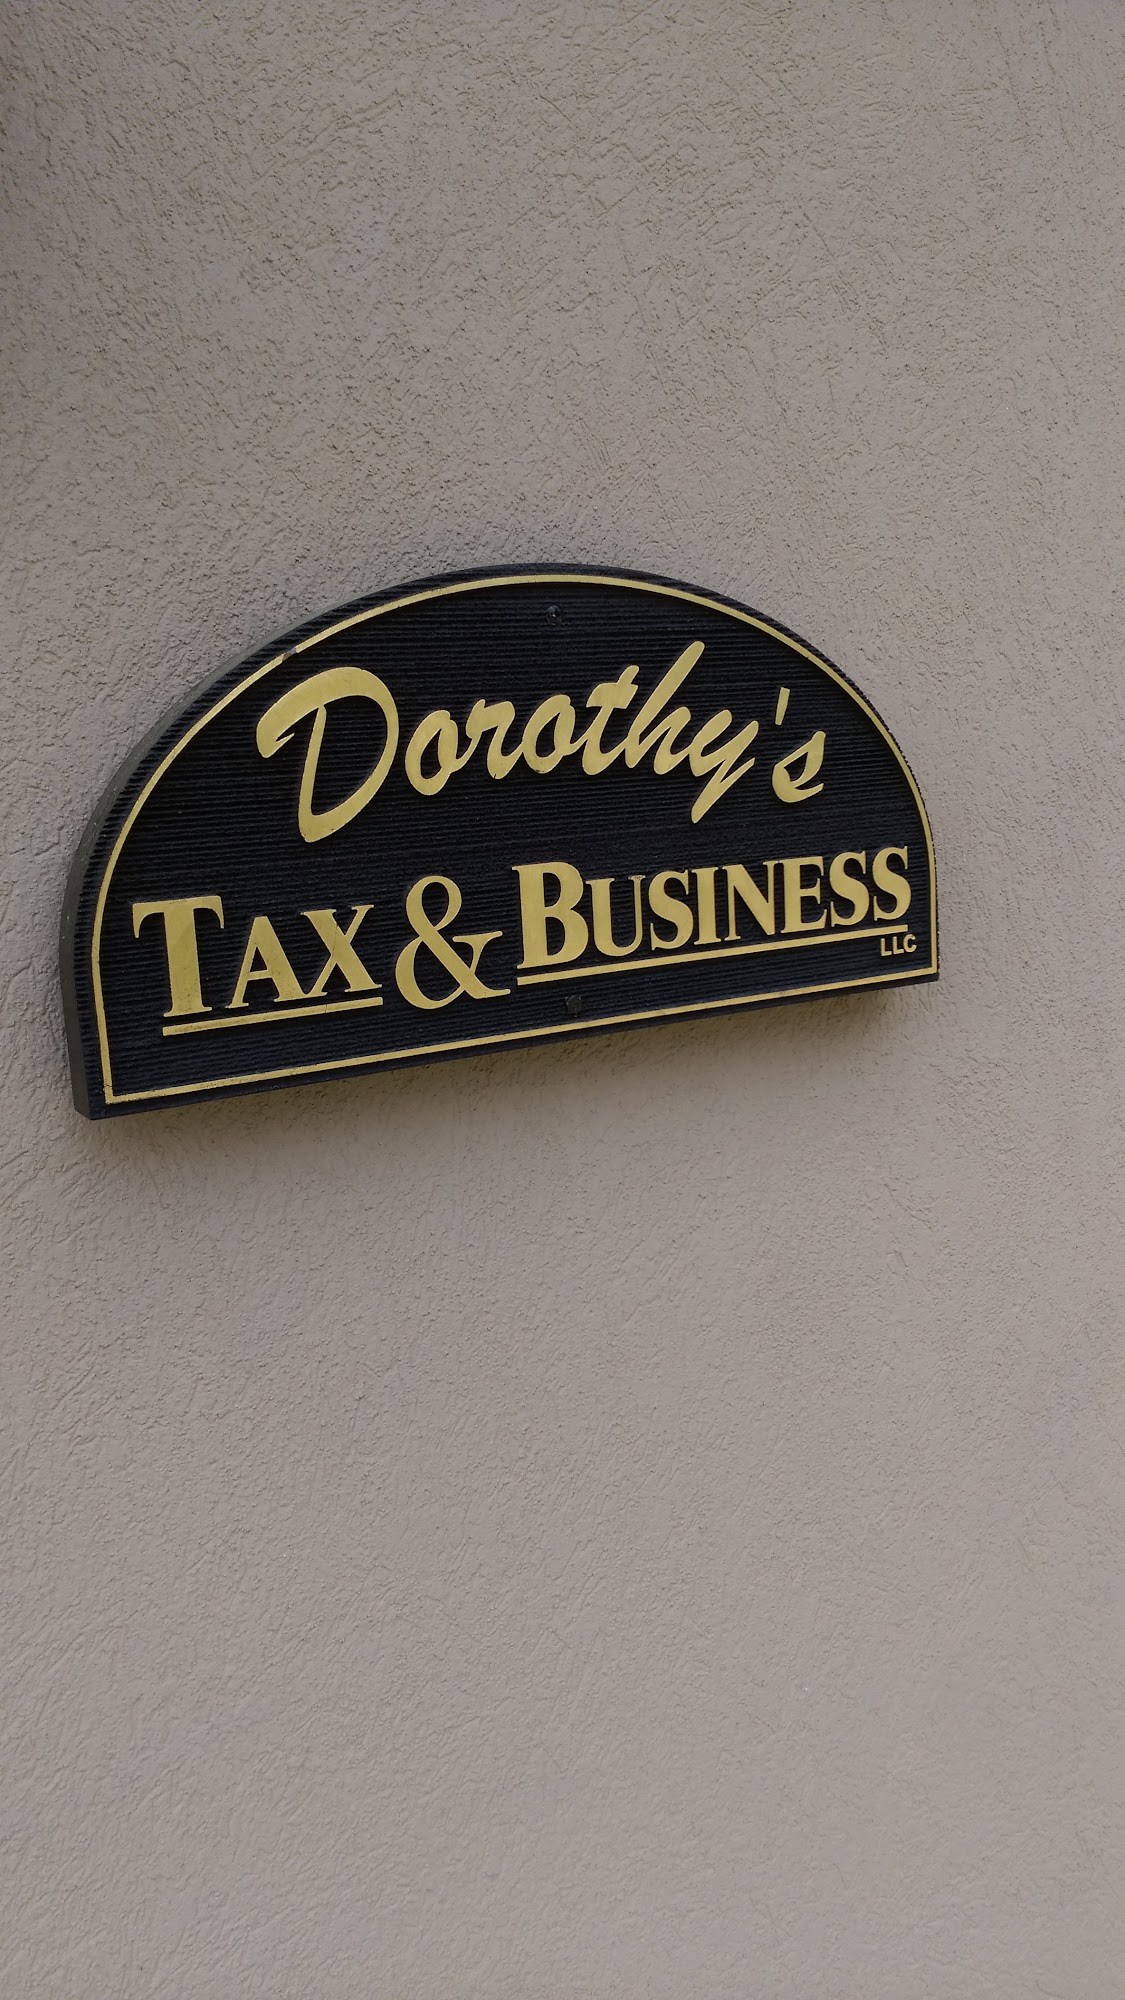 Dorothy's Tax & Business Inc.